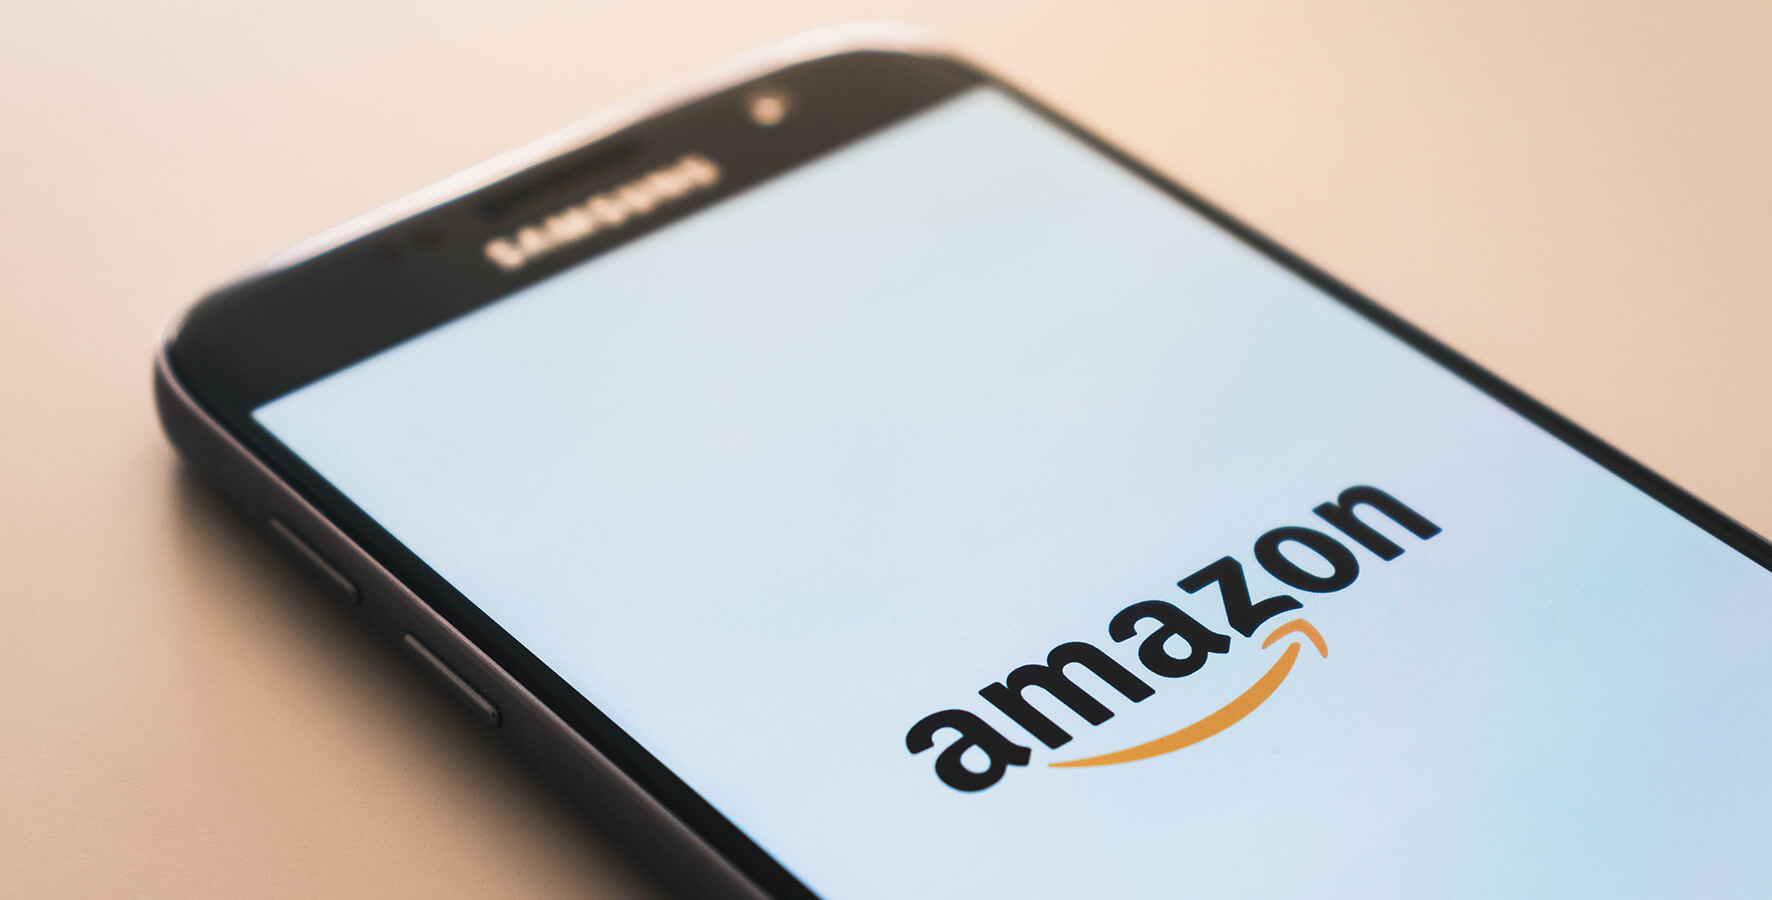 Amazon best sellers rank